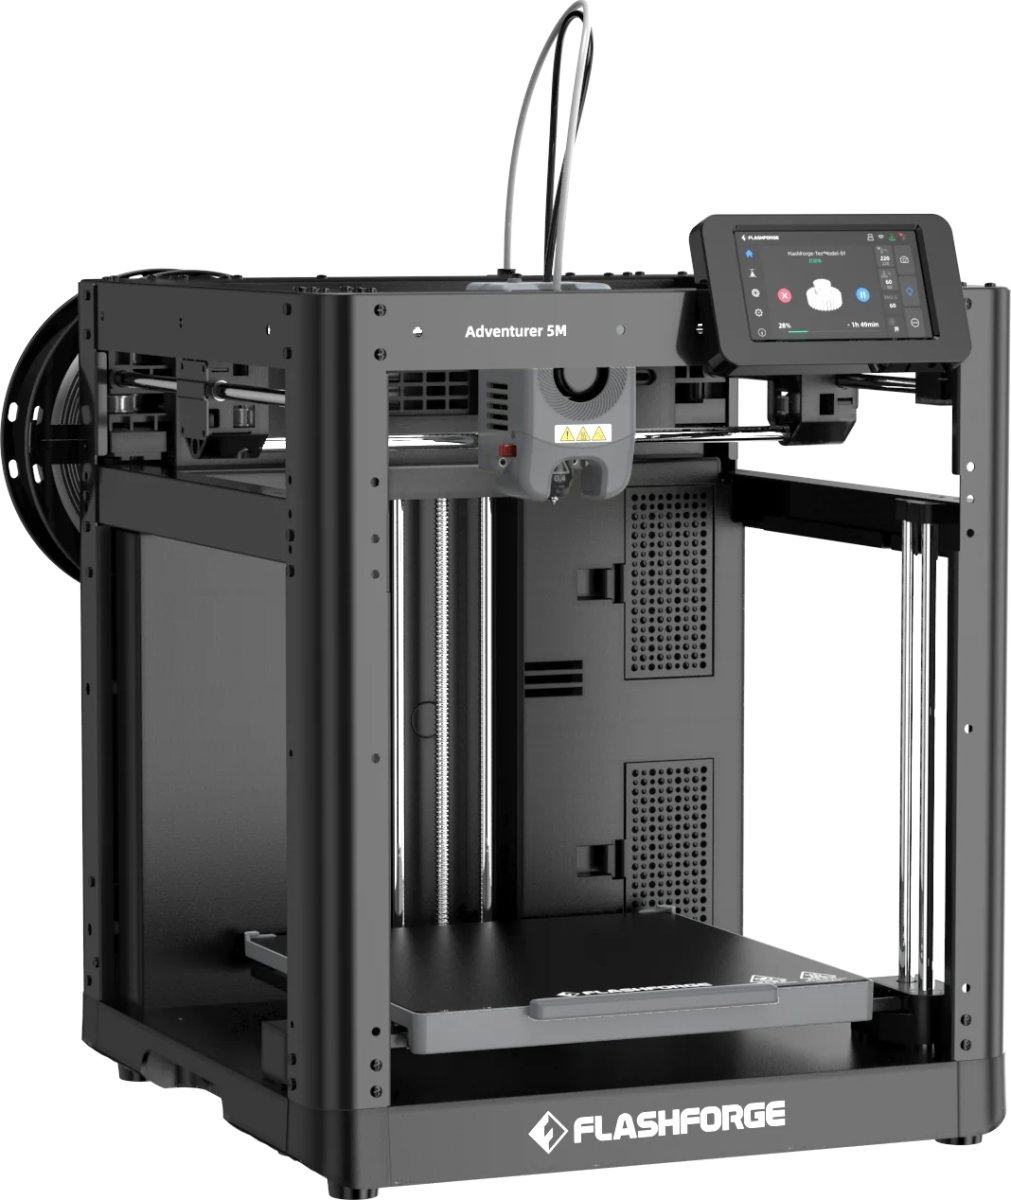 Flashforge Adventurer 5M 3D Printer FDM